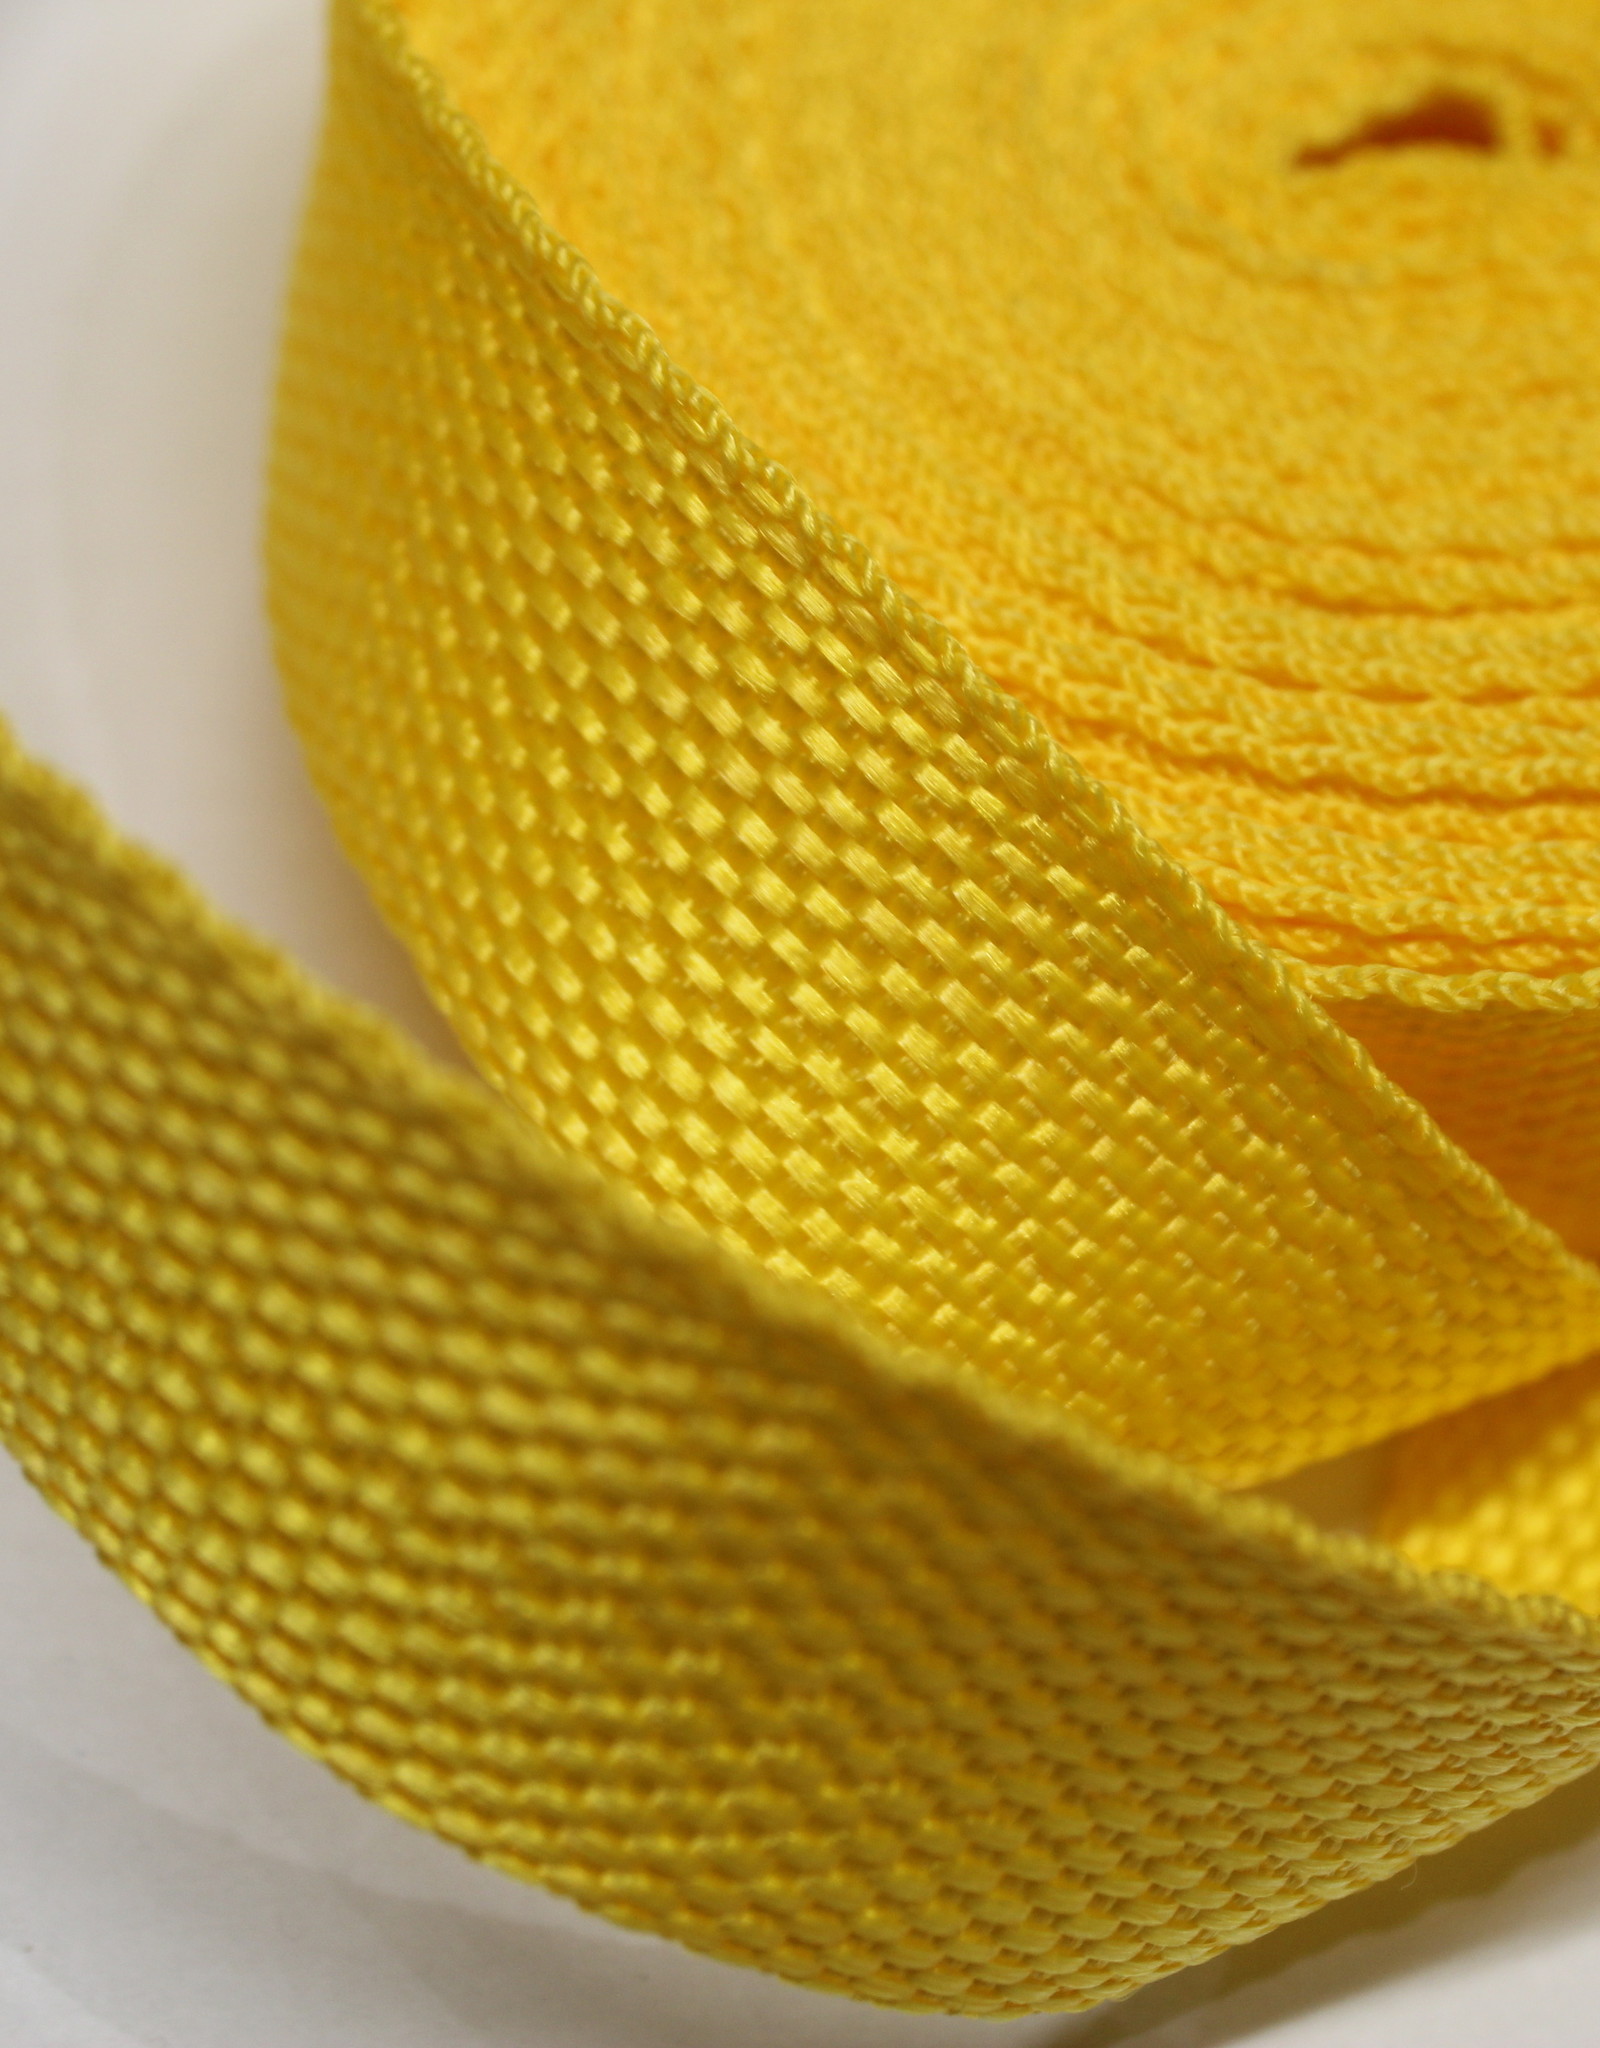 Tassenband geel 25mm